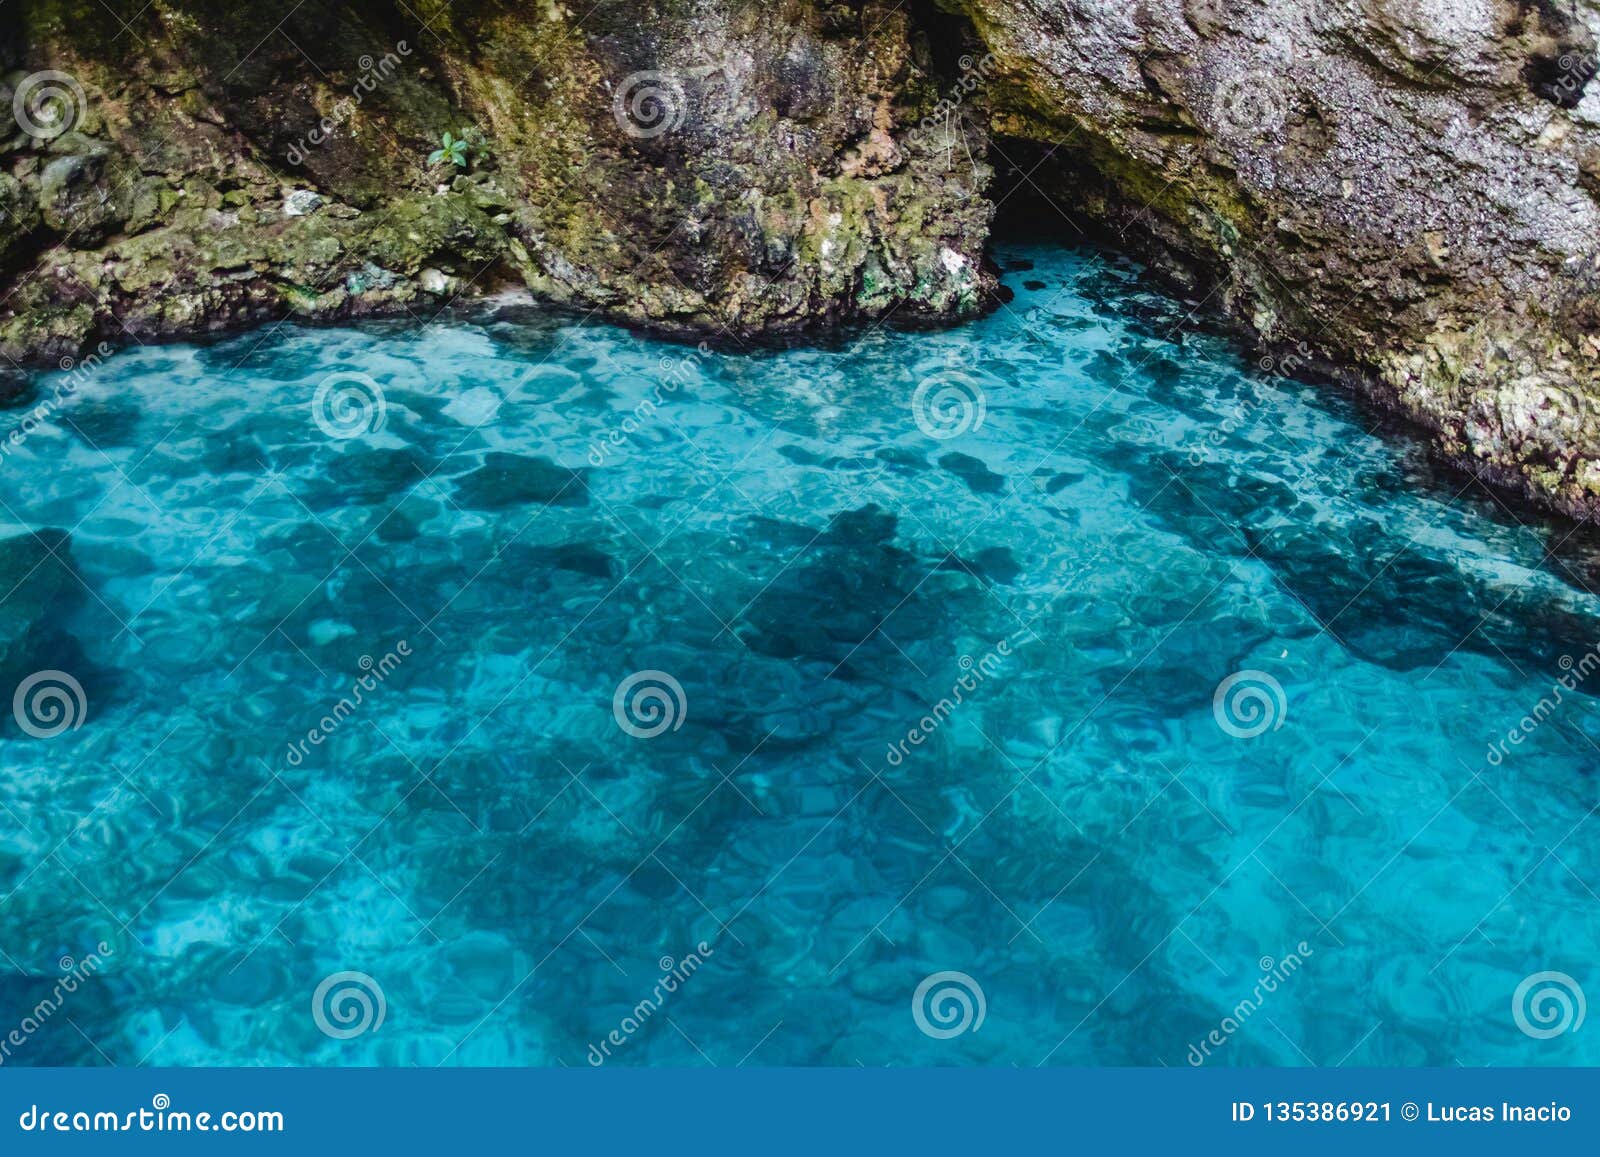 hoyo azul in punta cana, dominican republic